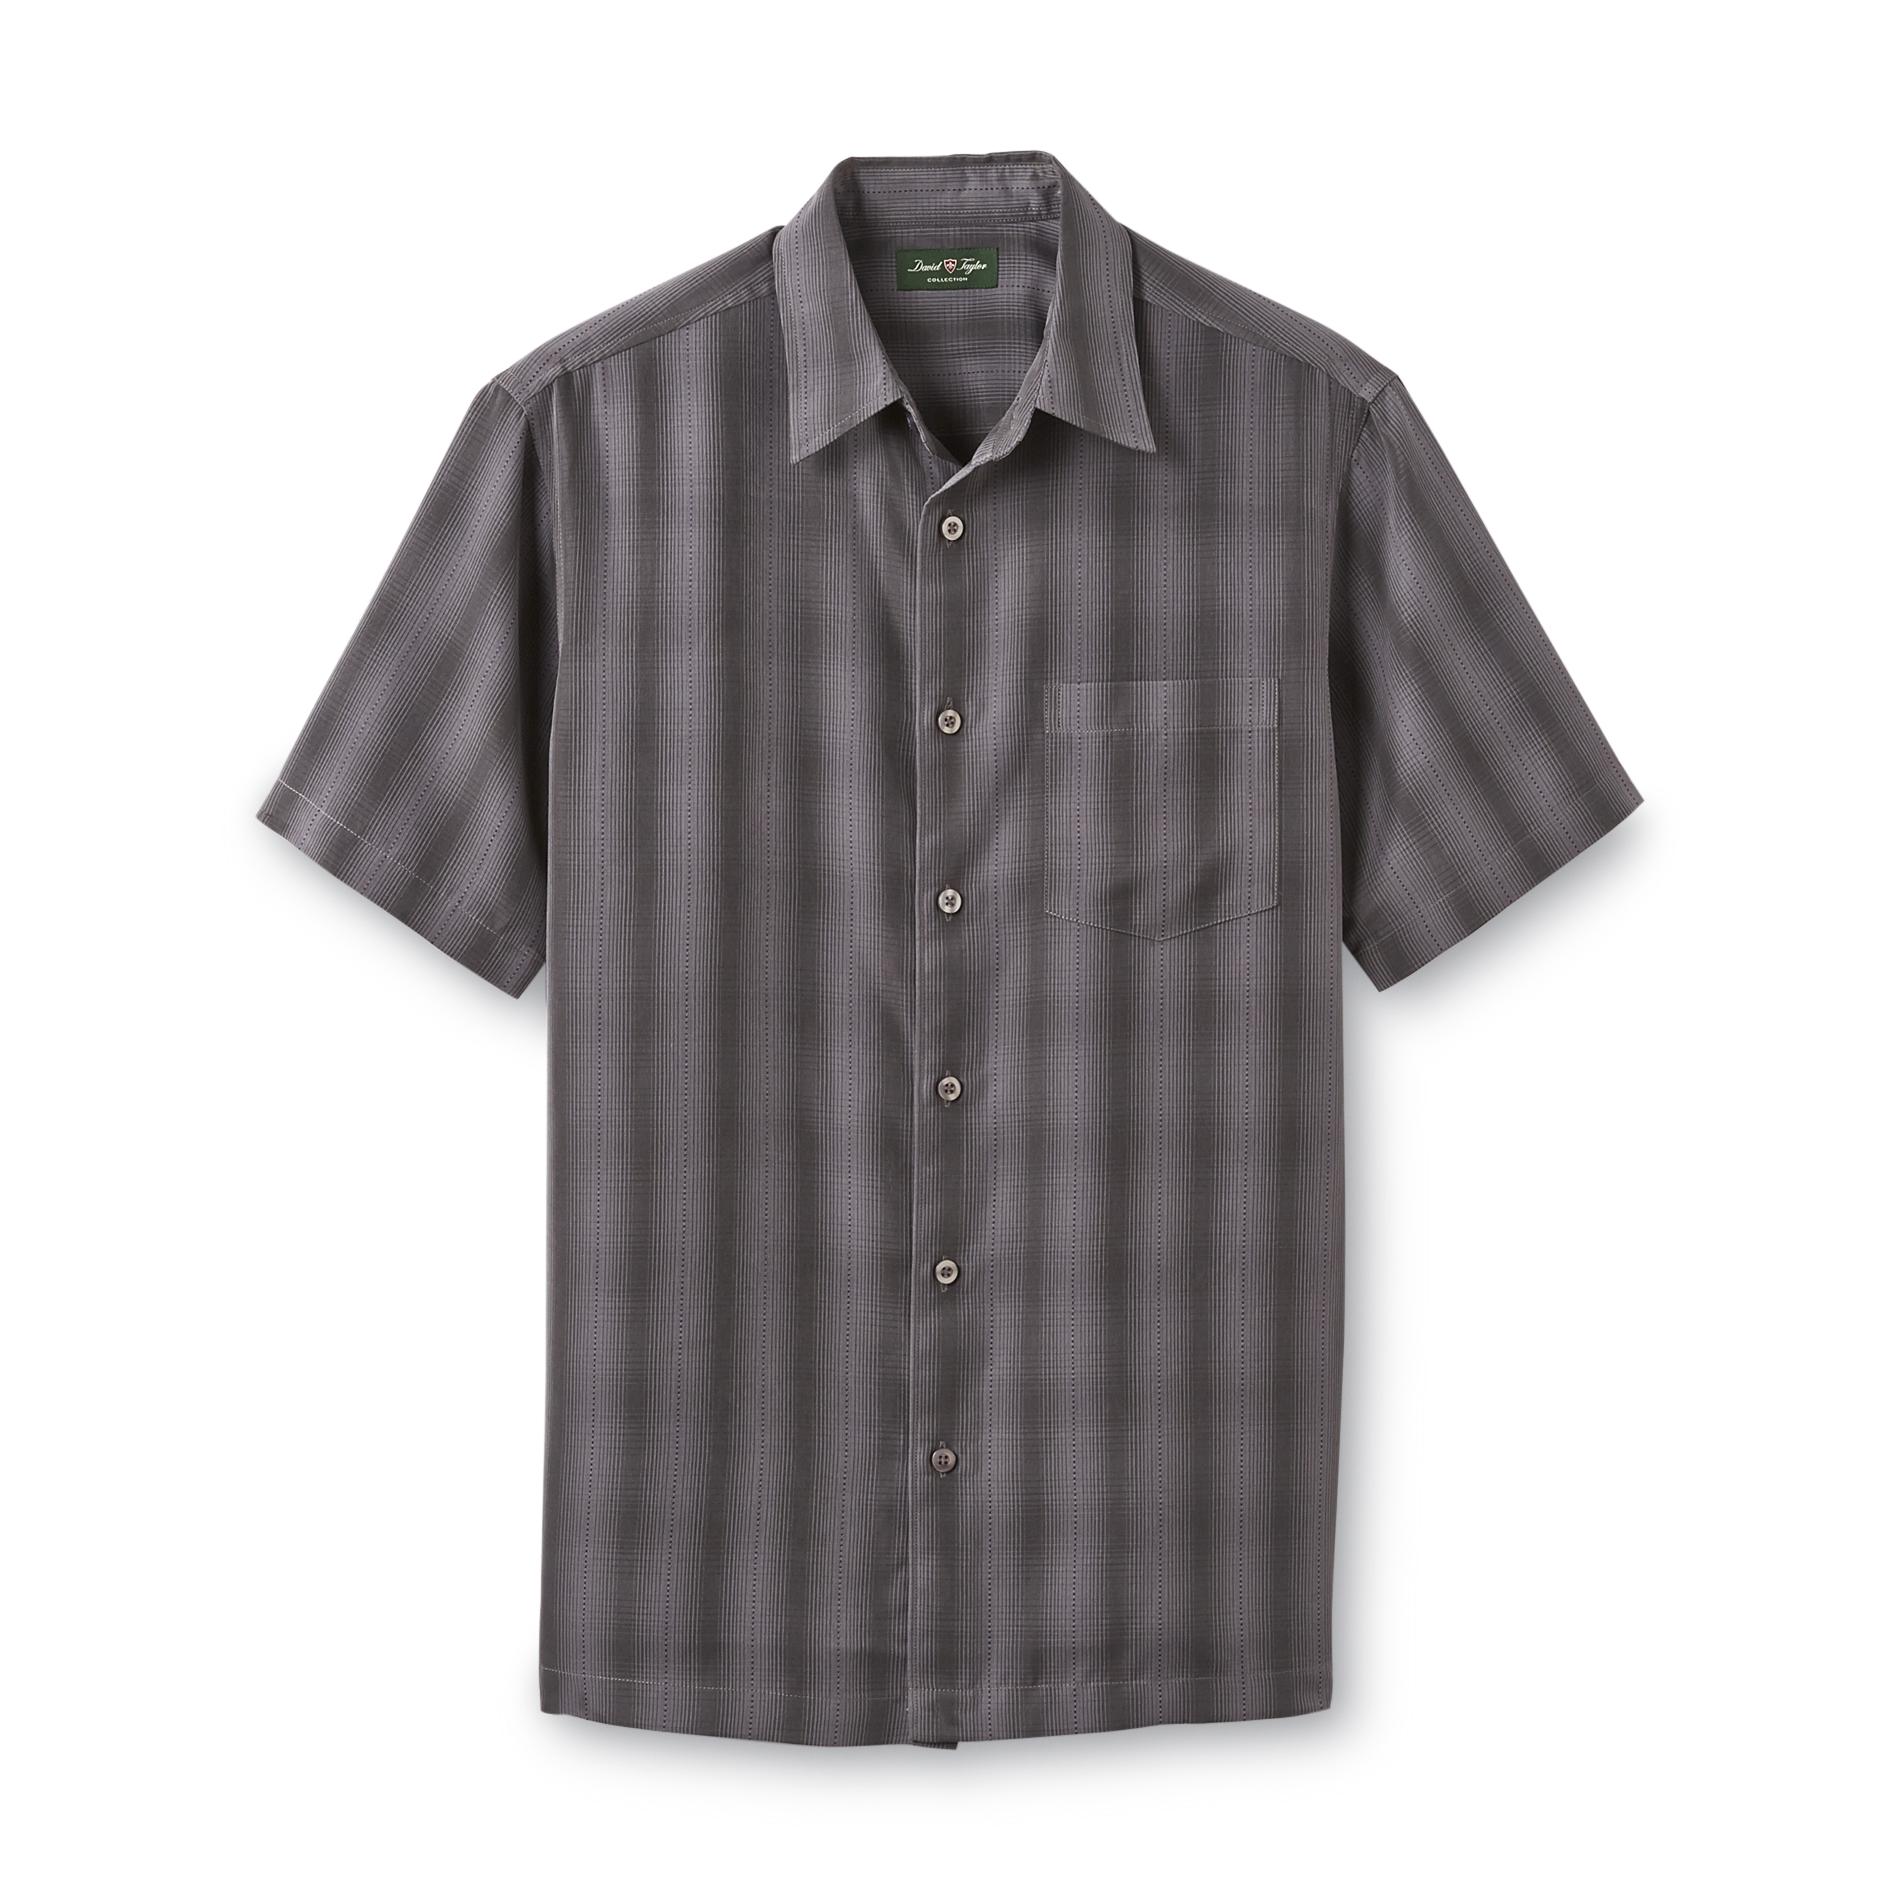 David Taylor Collection Men's Short-Sleeve Shirt - Striped